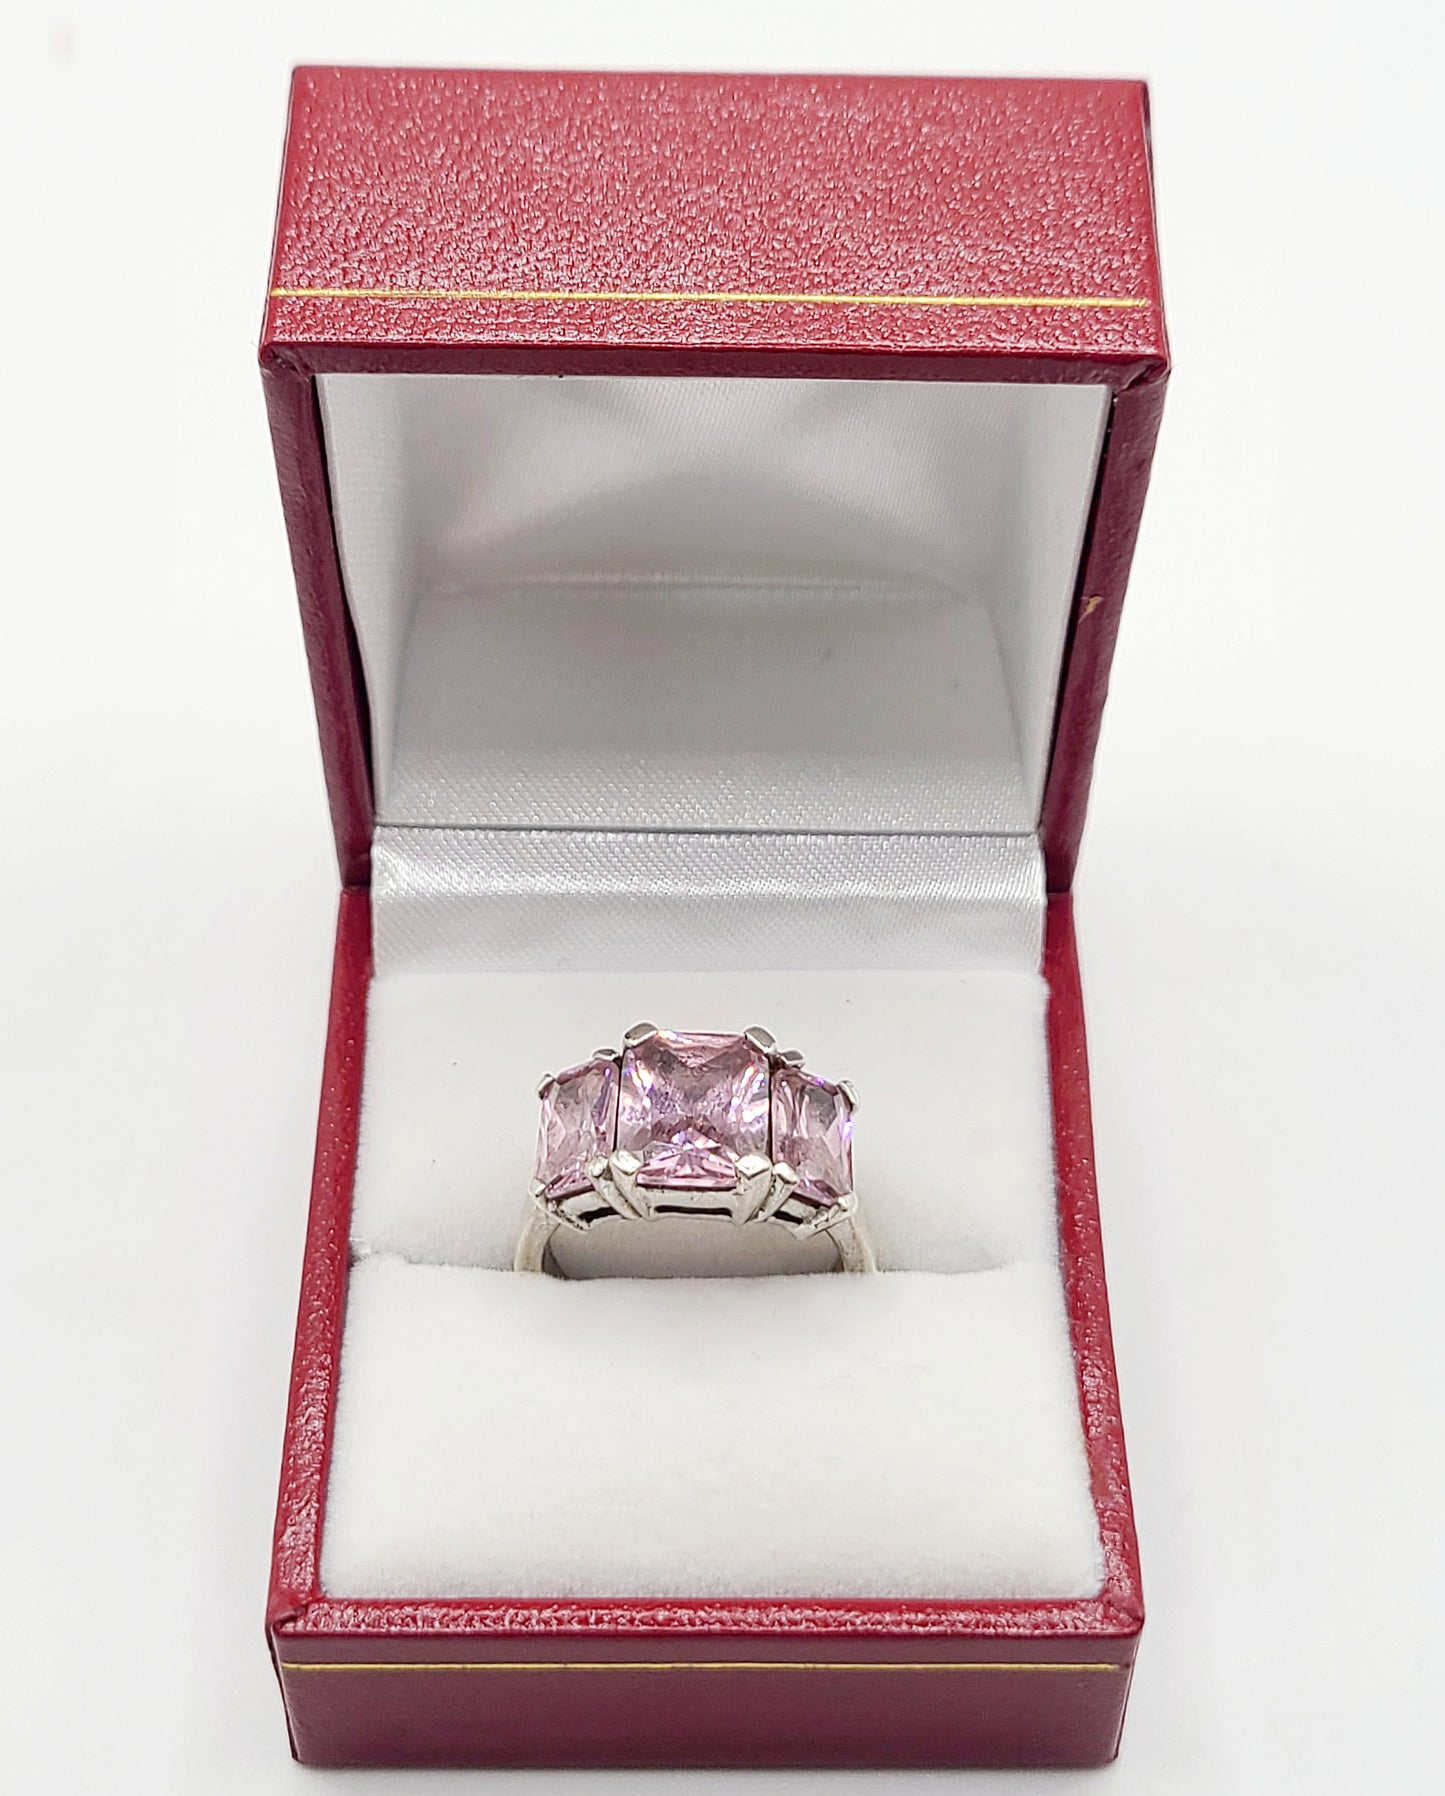 Pink Tourmaline Trilogy Sterling Silver Ring (M)